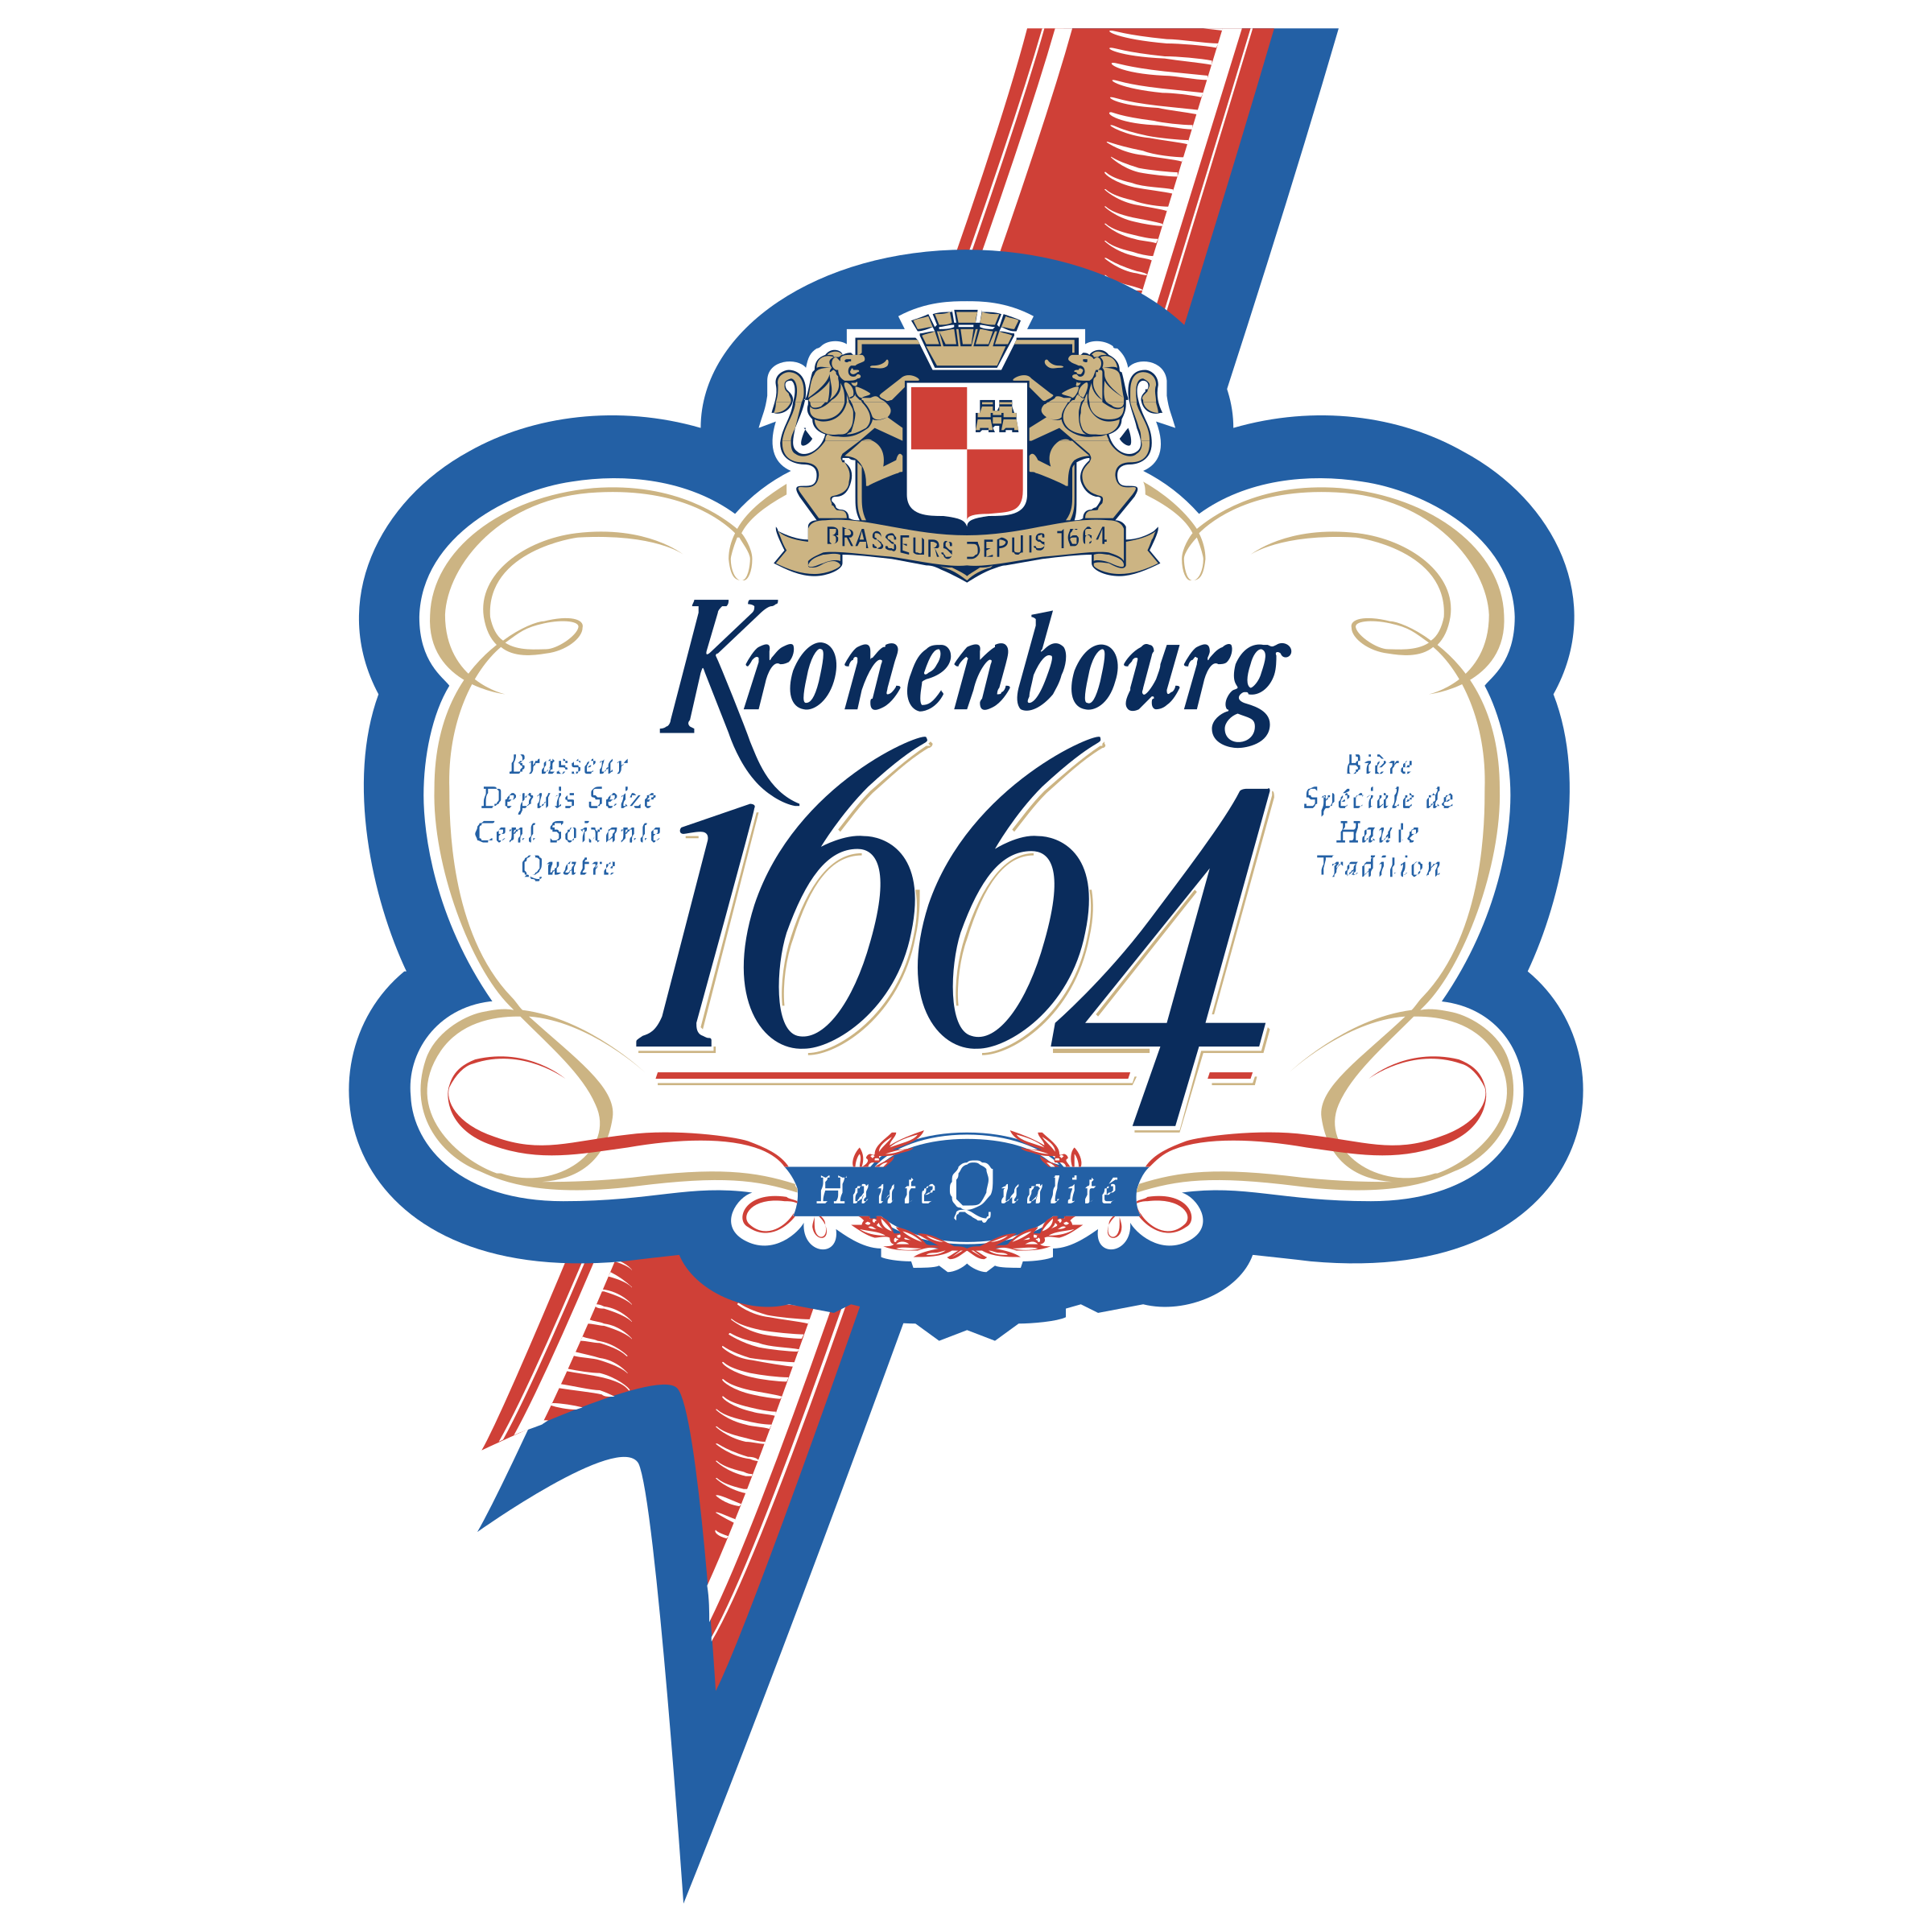 Kronenbourg 1664 Logo PNG HD Quality